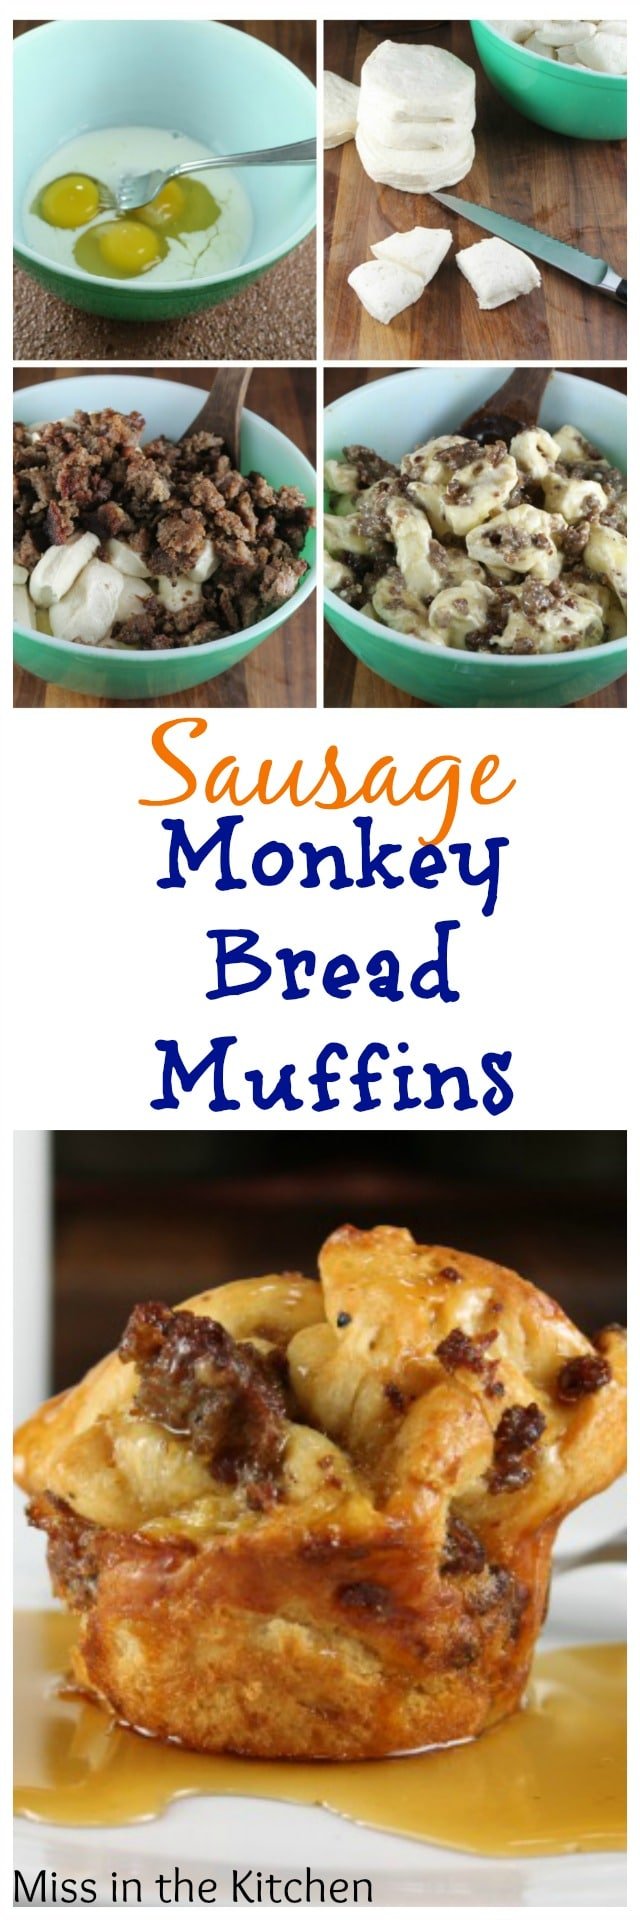 Sausage Monkey Bread Muffins Recipe from MissintheKitchen.com